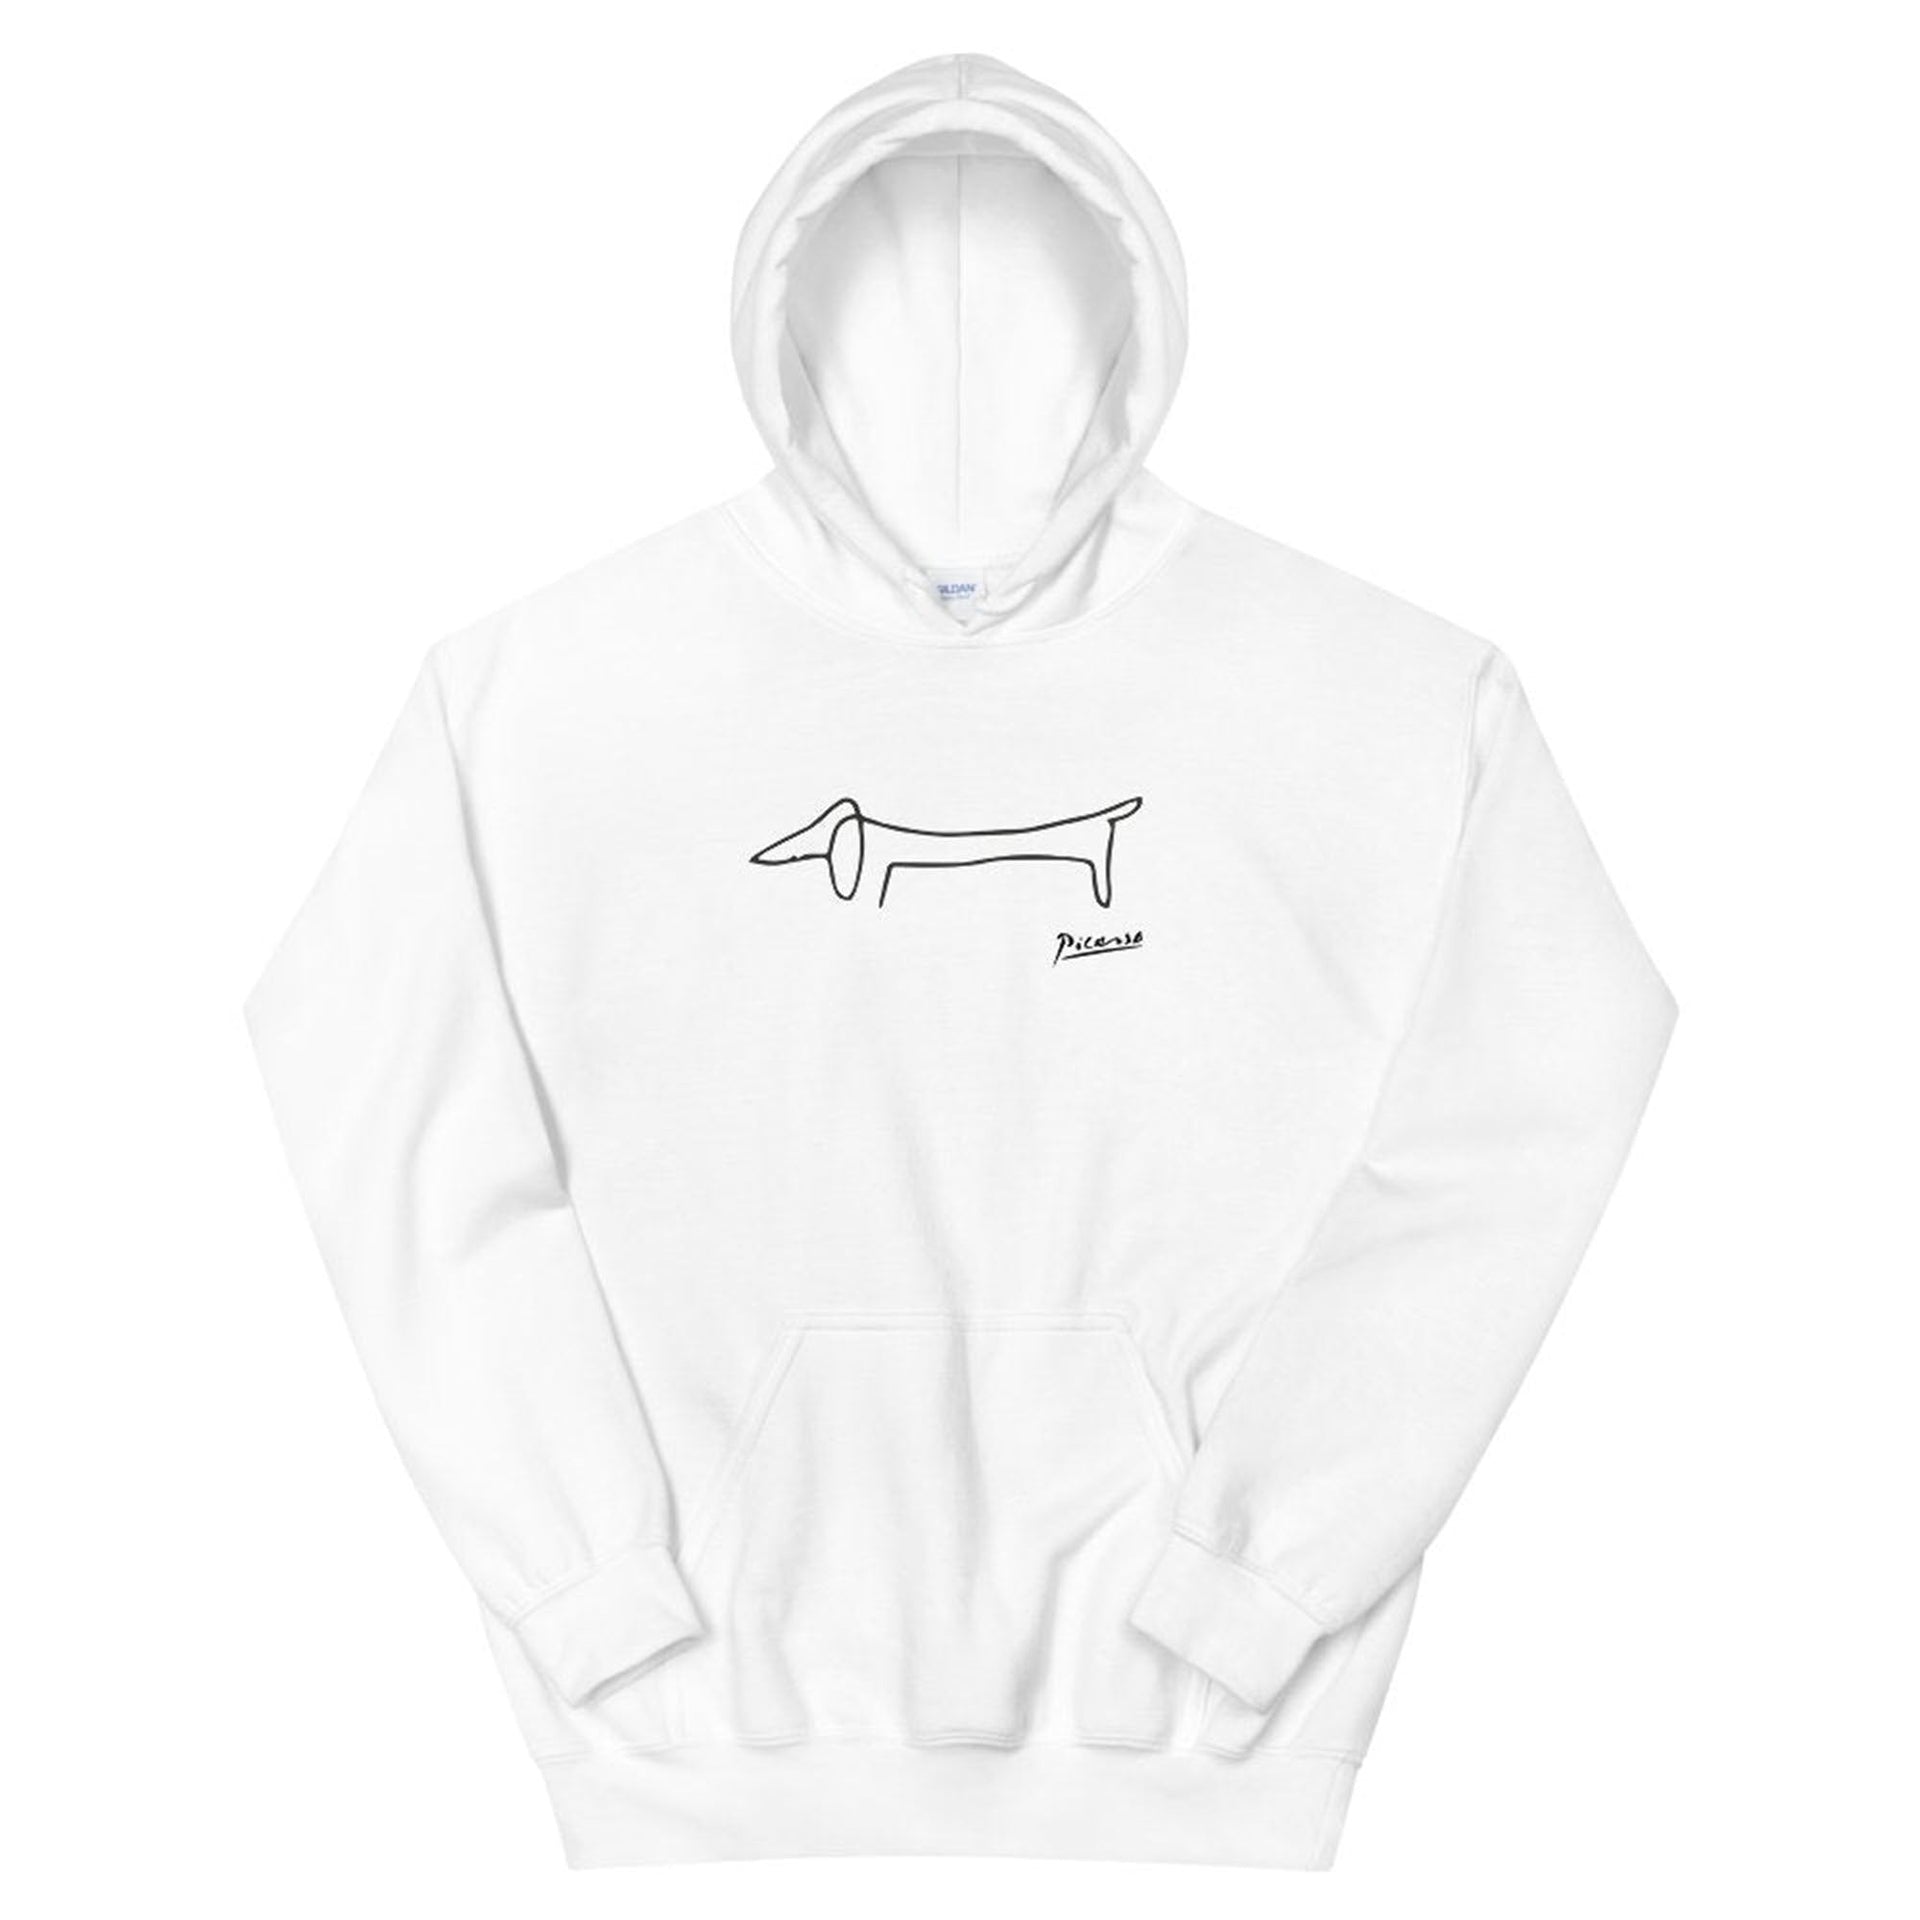 Pablo Picasso Dachshund Dog (Lump) Artwork Hoodie - Clothing - Harvey Ltd